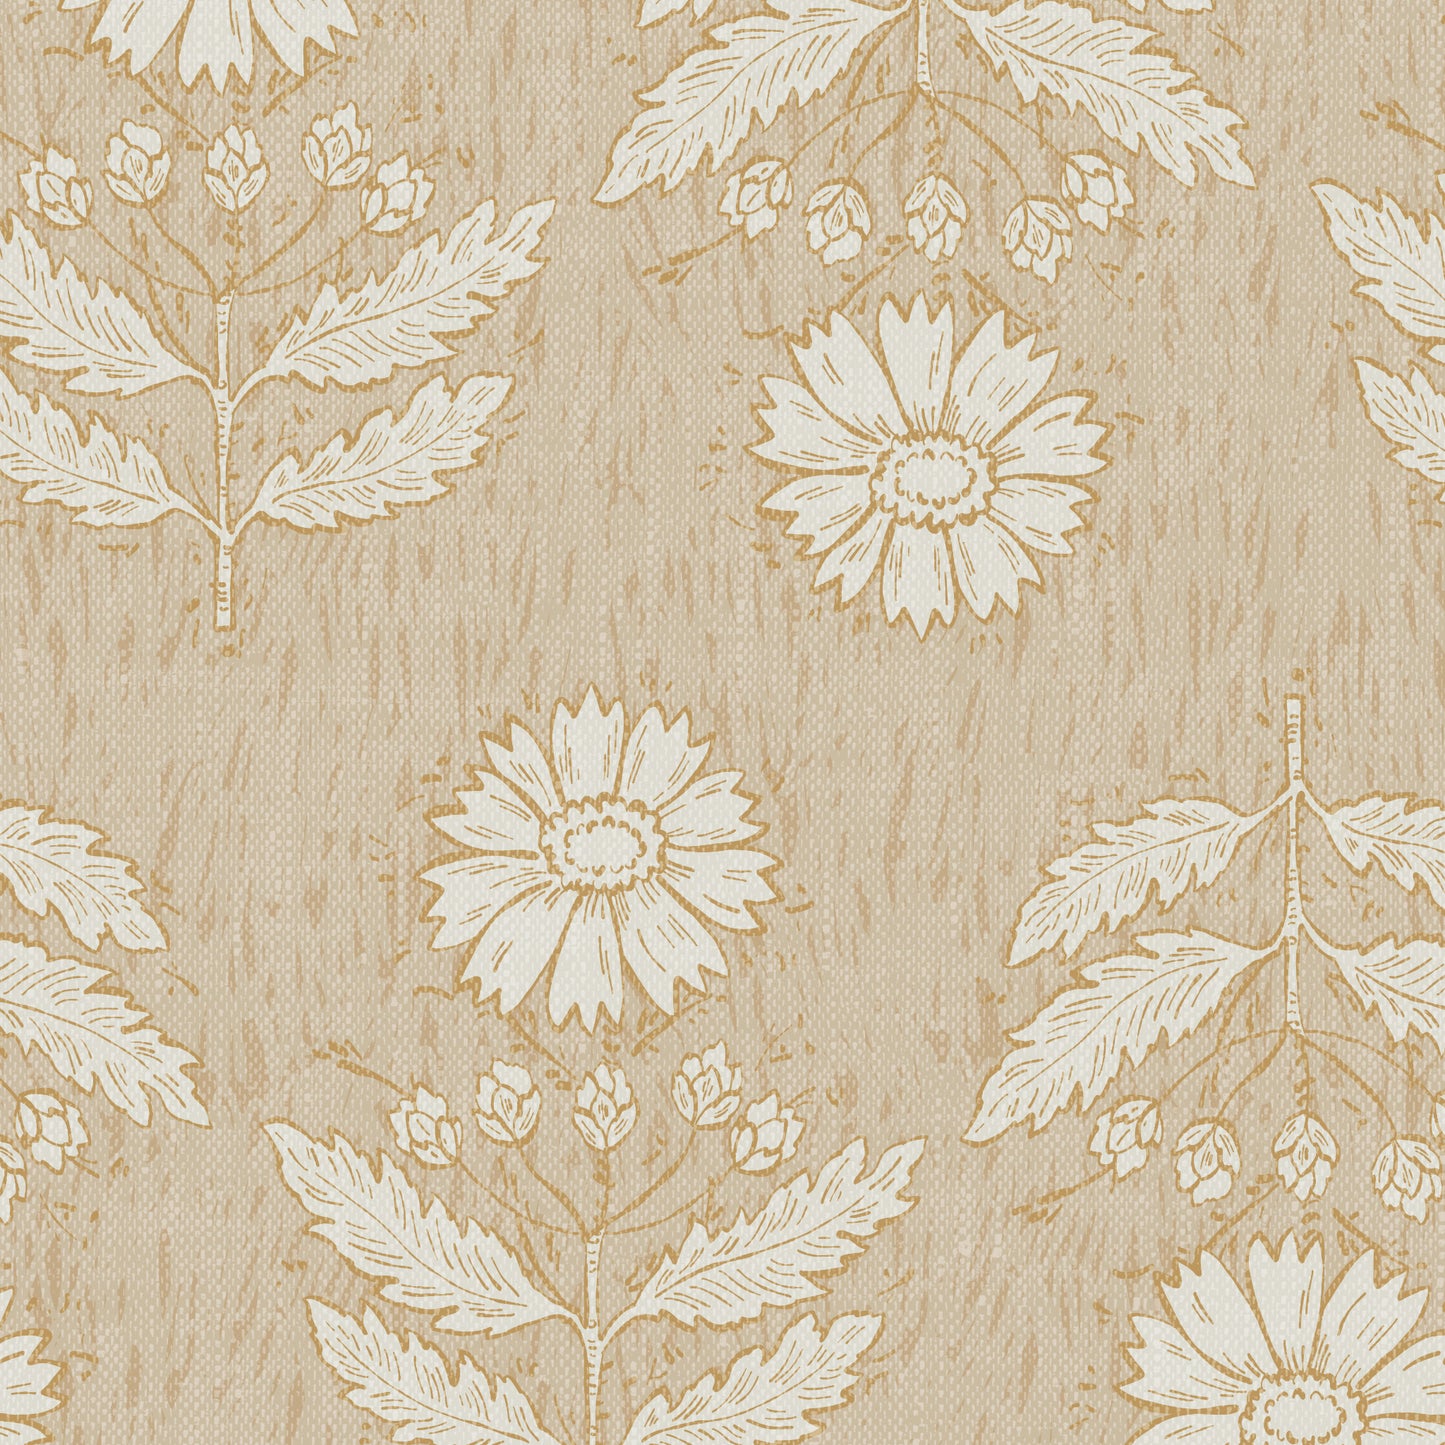 Antique Floral Rows Wallpaper - Tan